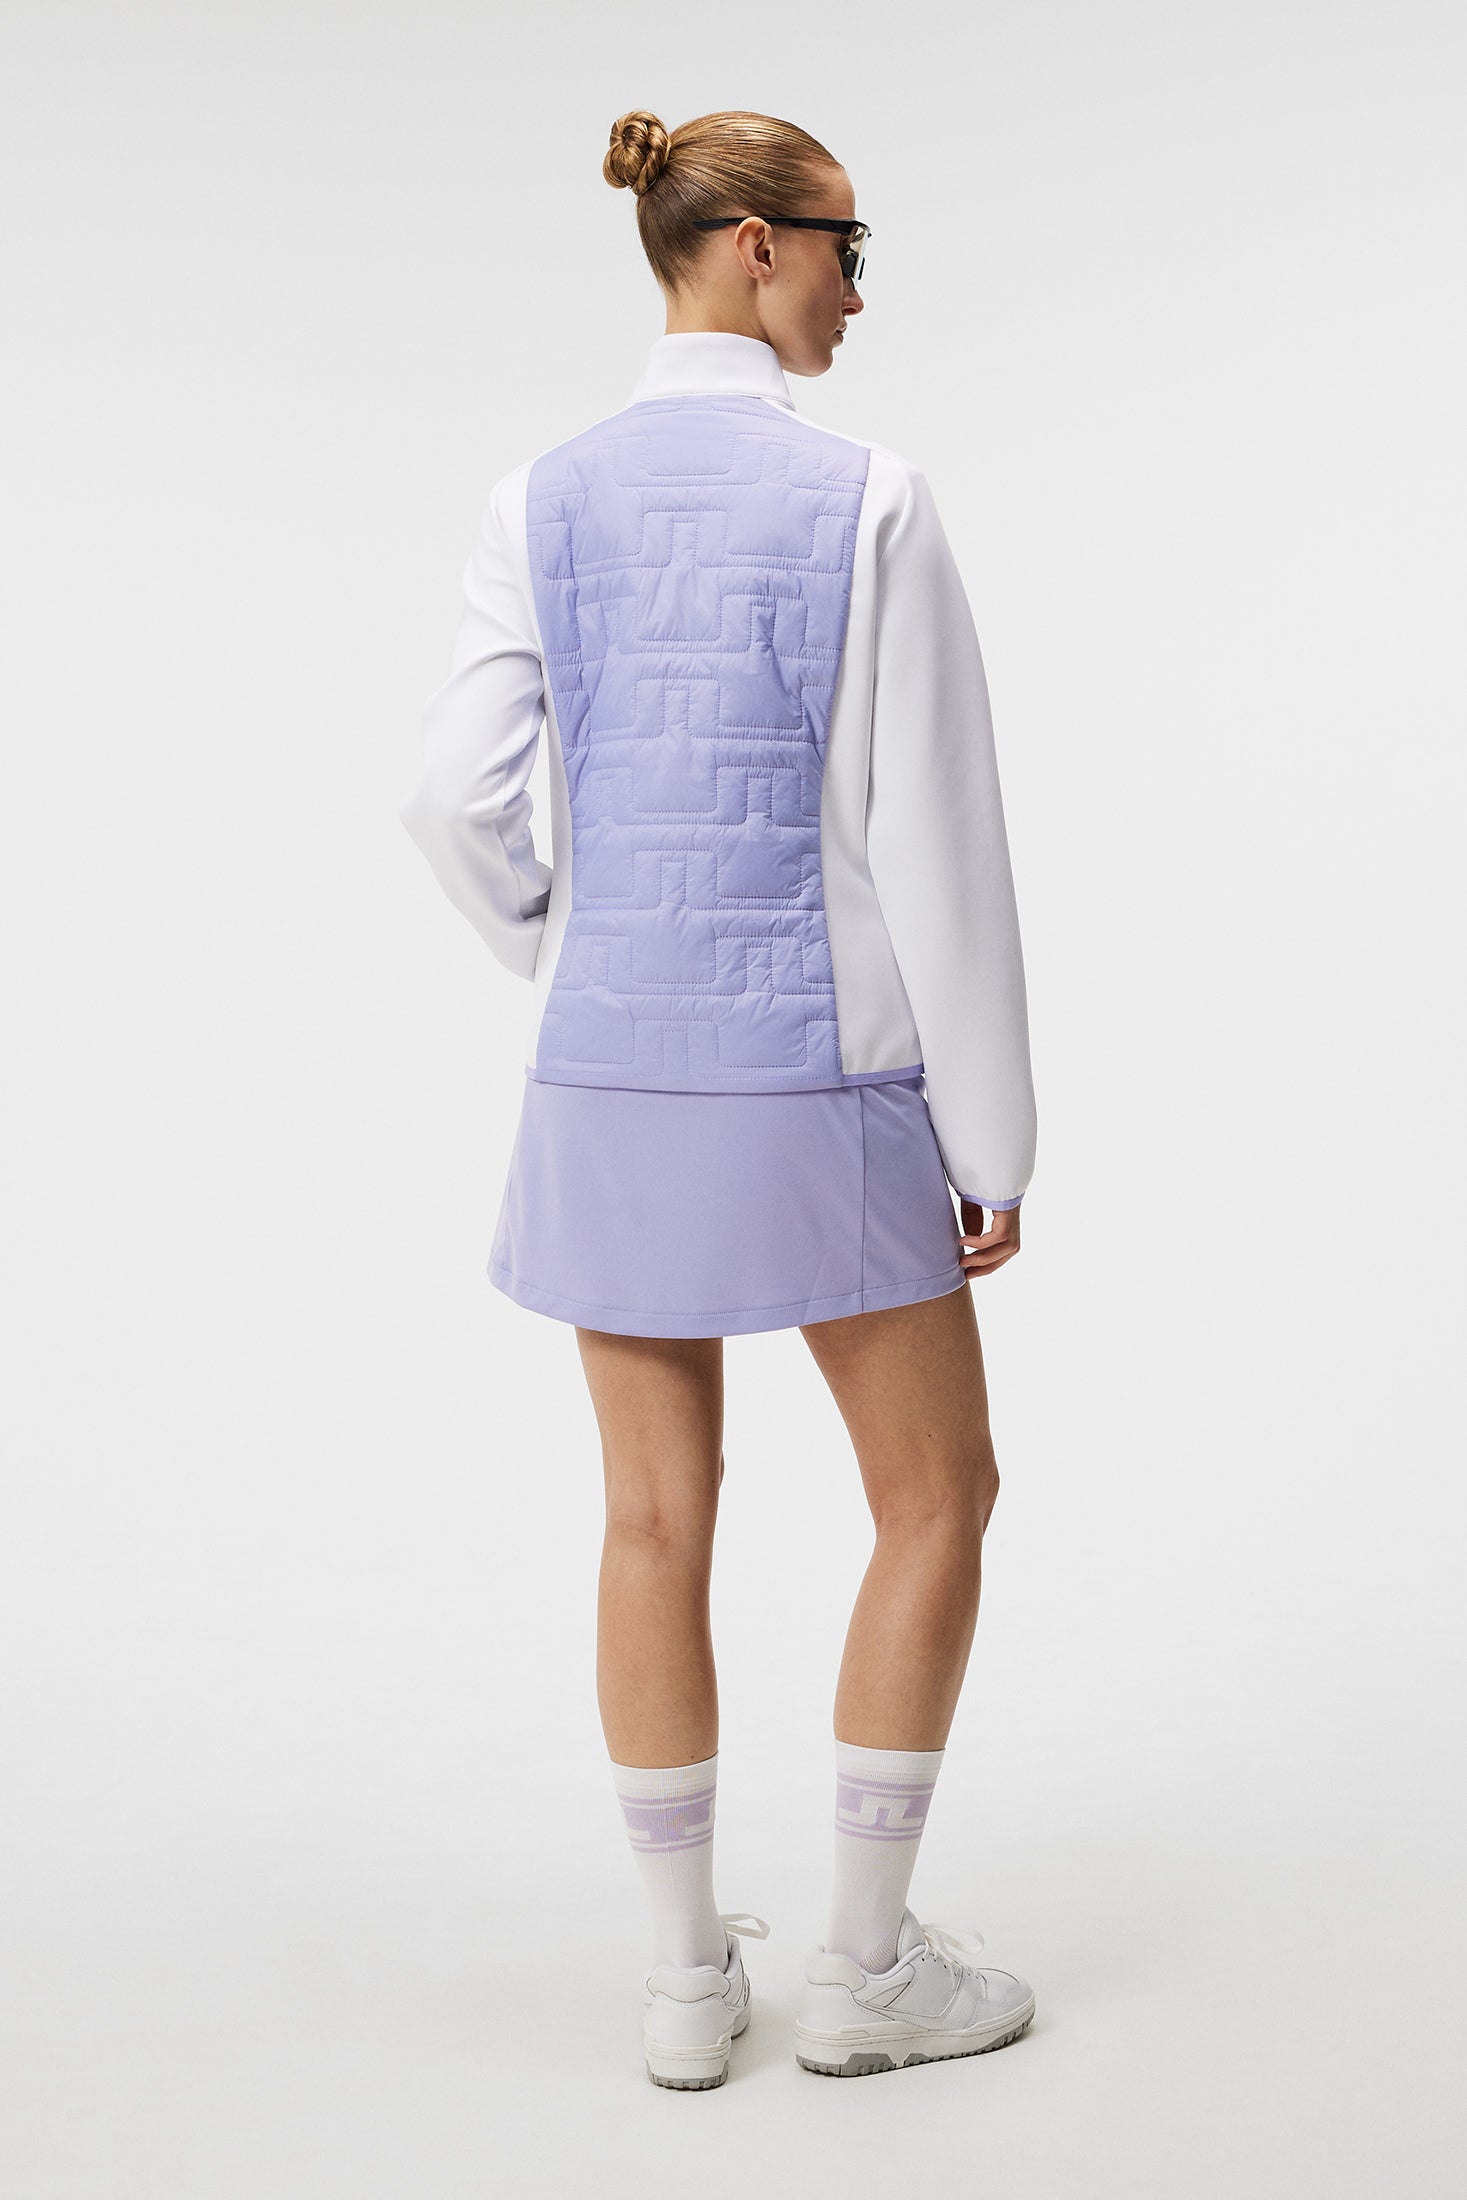 Women's Quilt Hybrid Jacket